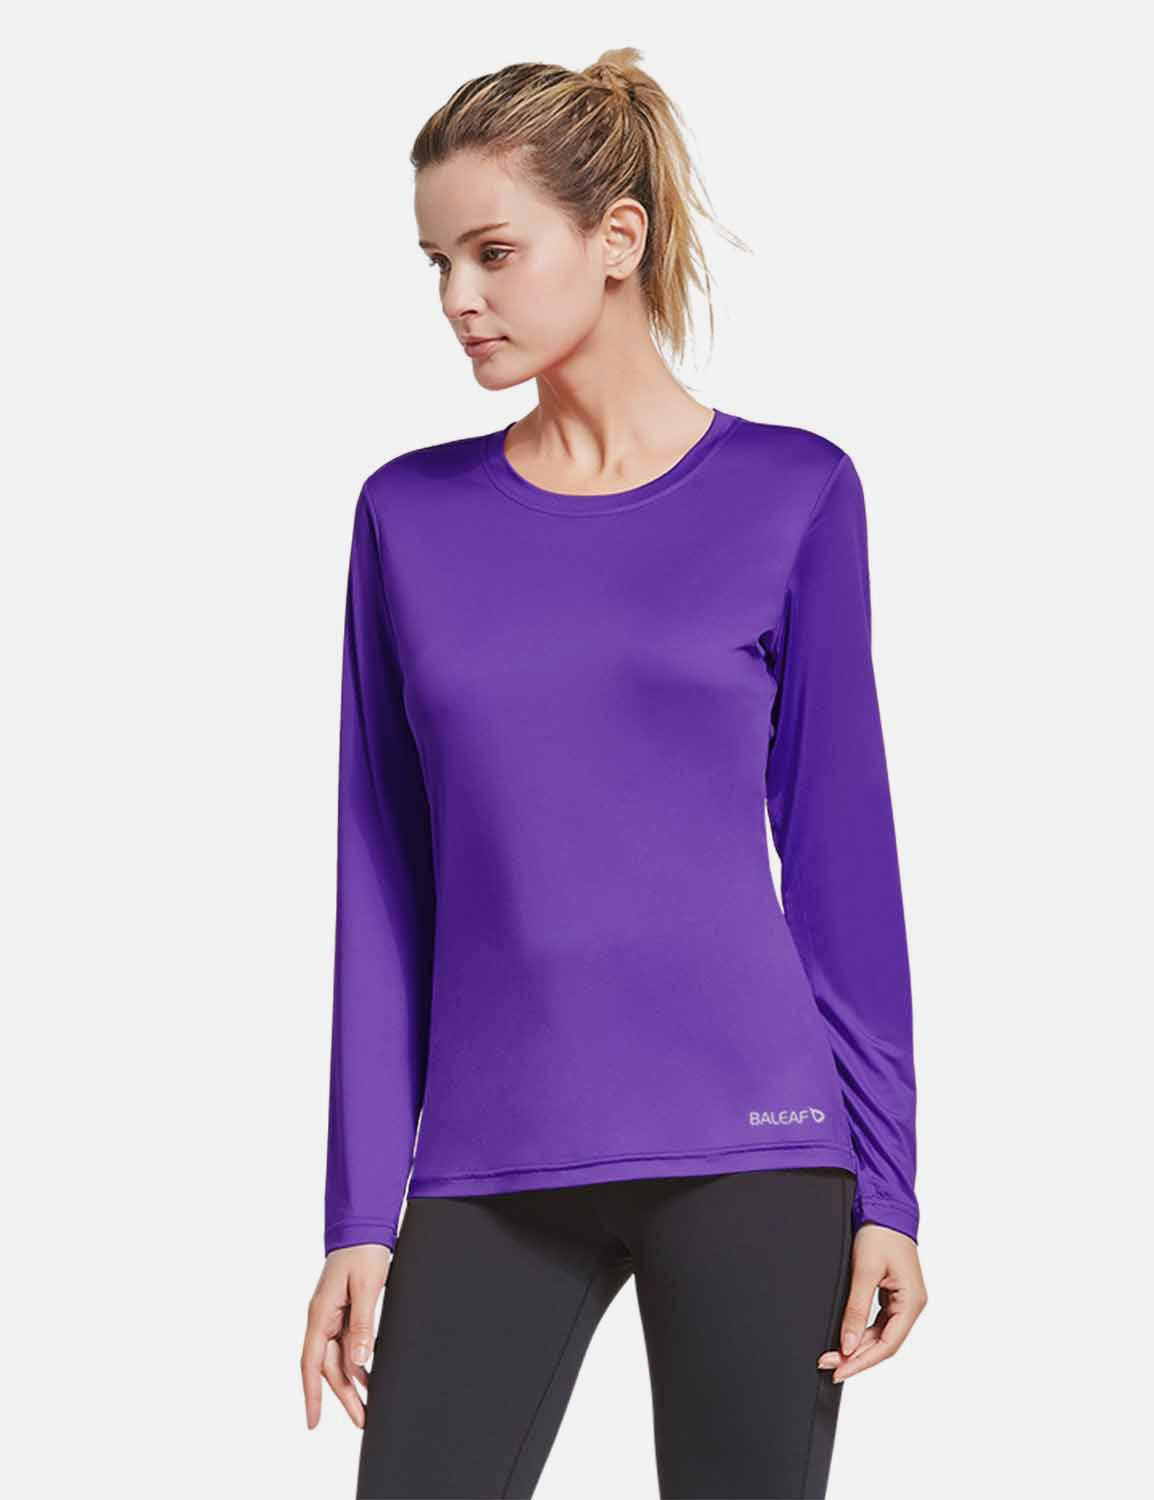 BALEAF Women's Loose Fit Tagless Workout Long Sleeved Shirt abd294 Purple Front